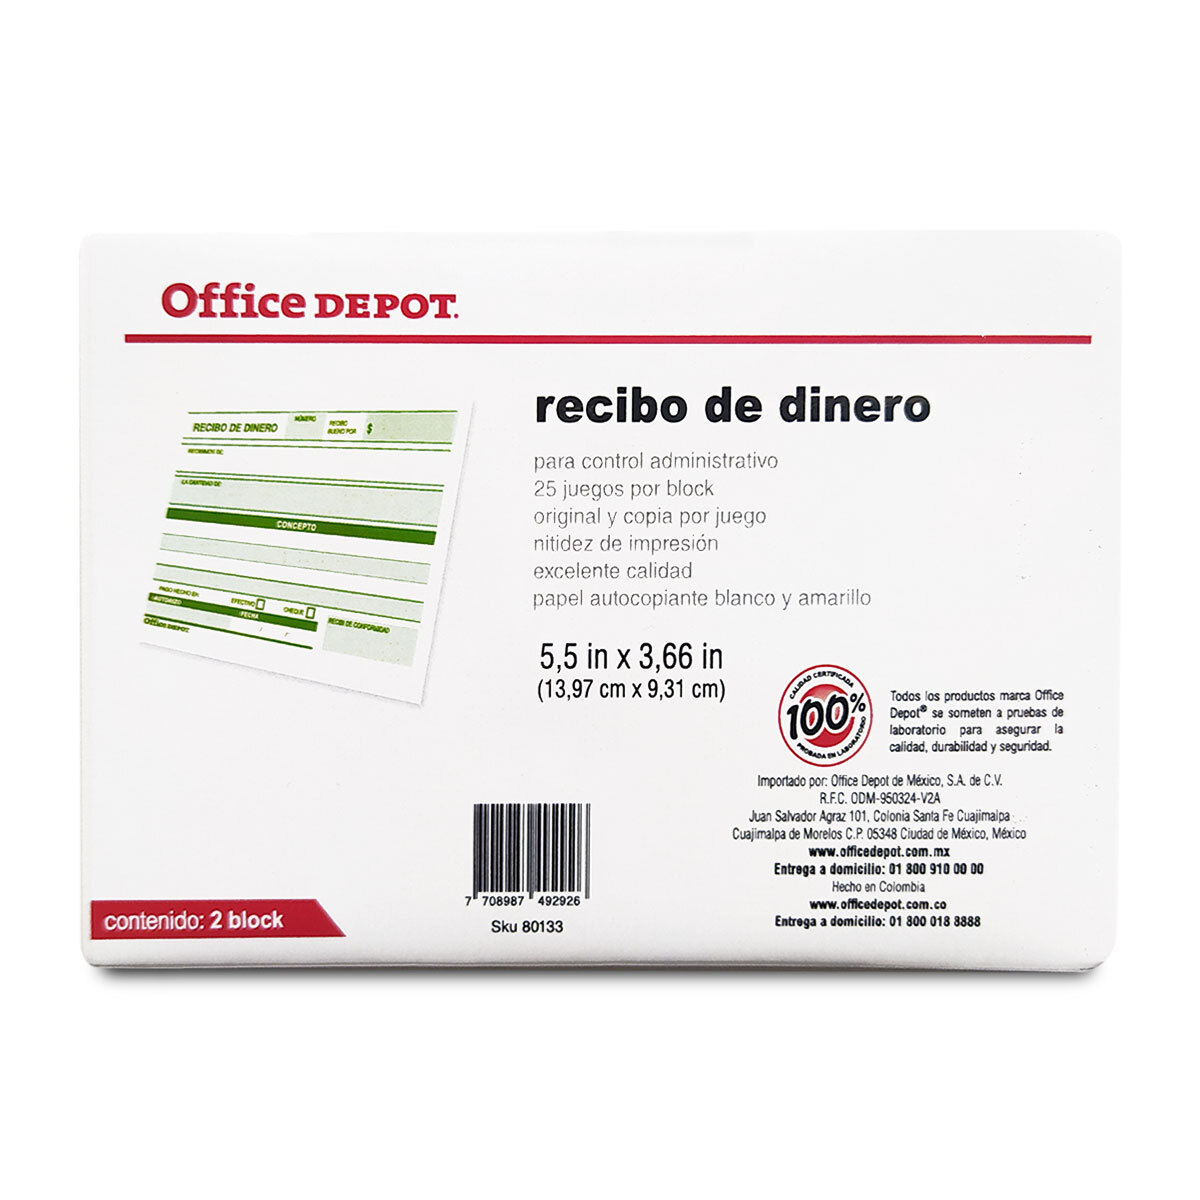 Recibo de Dinero Office Depot Autocopiante 2 blocks | Office Depot Mexico